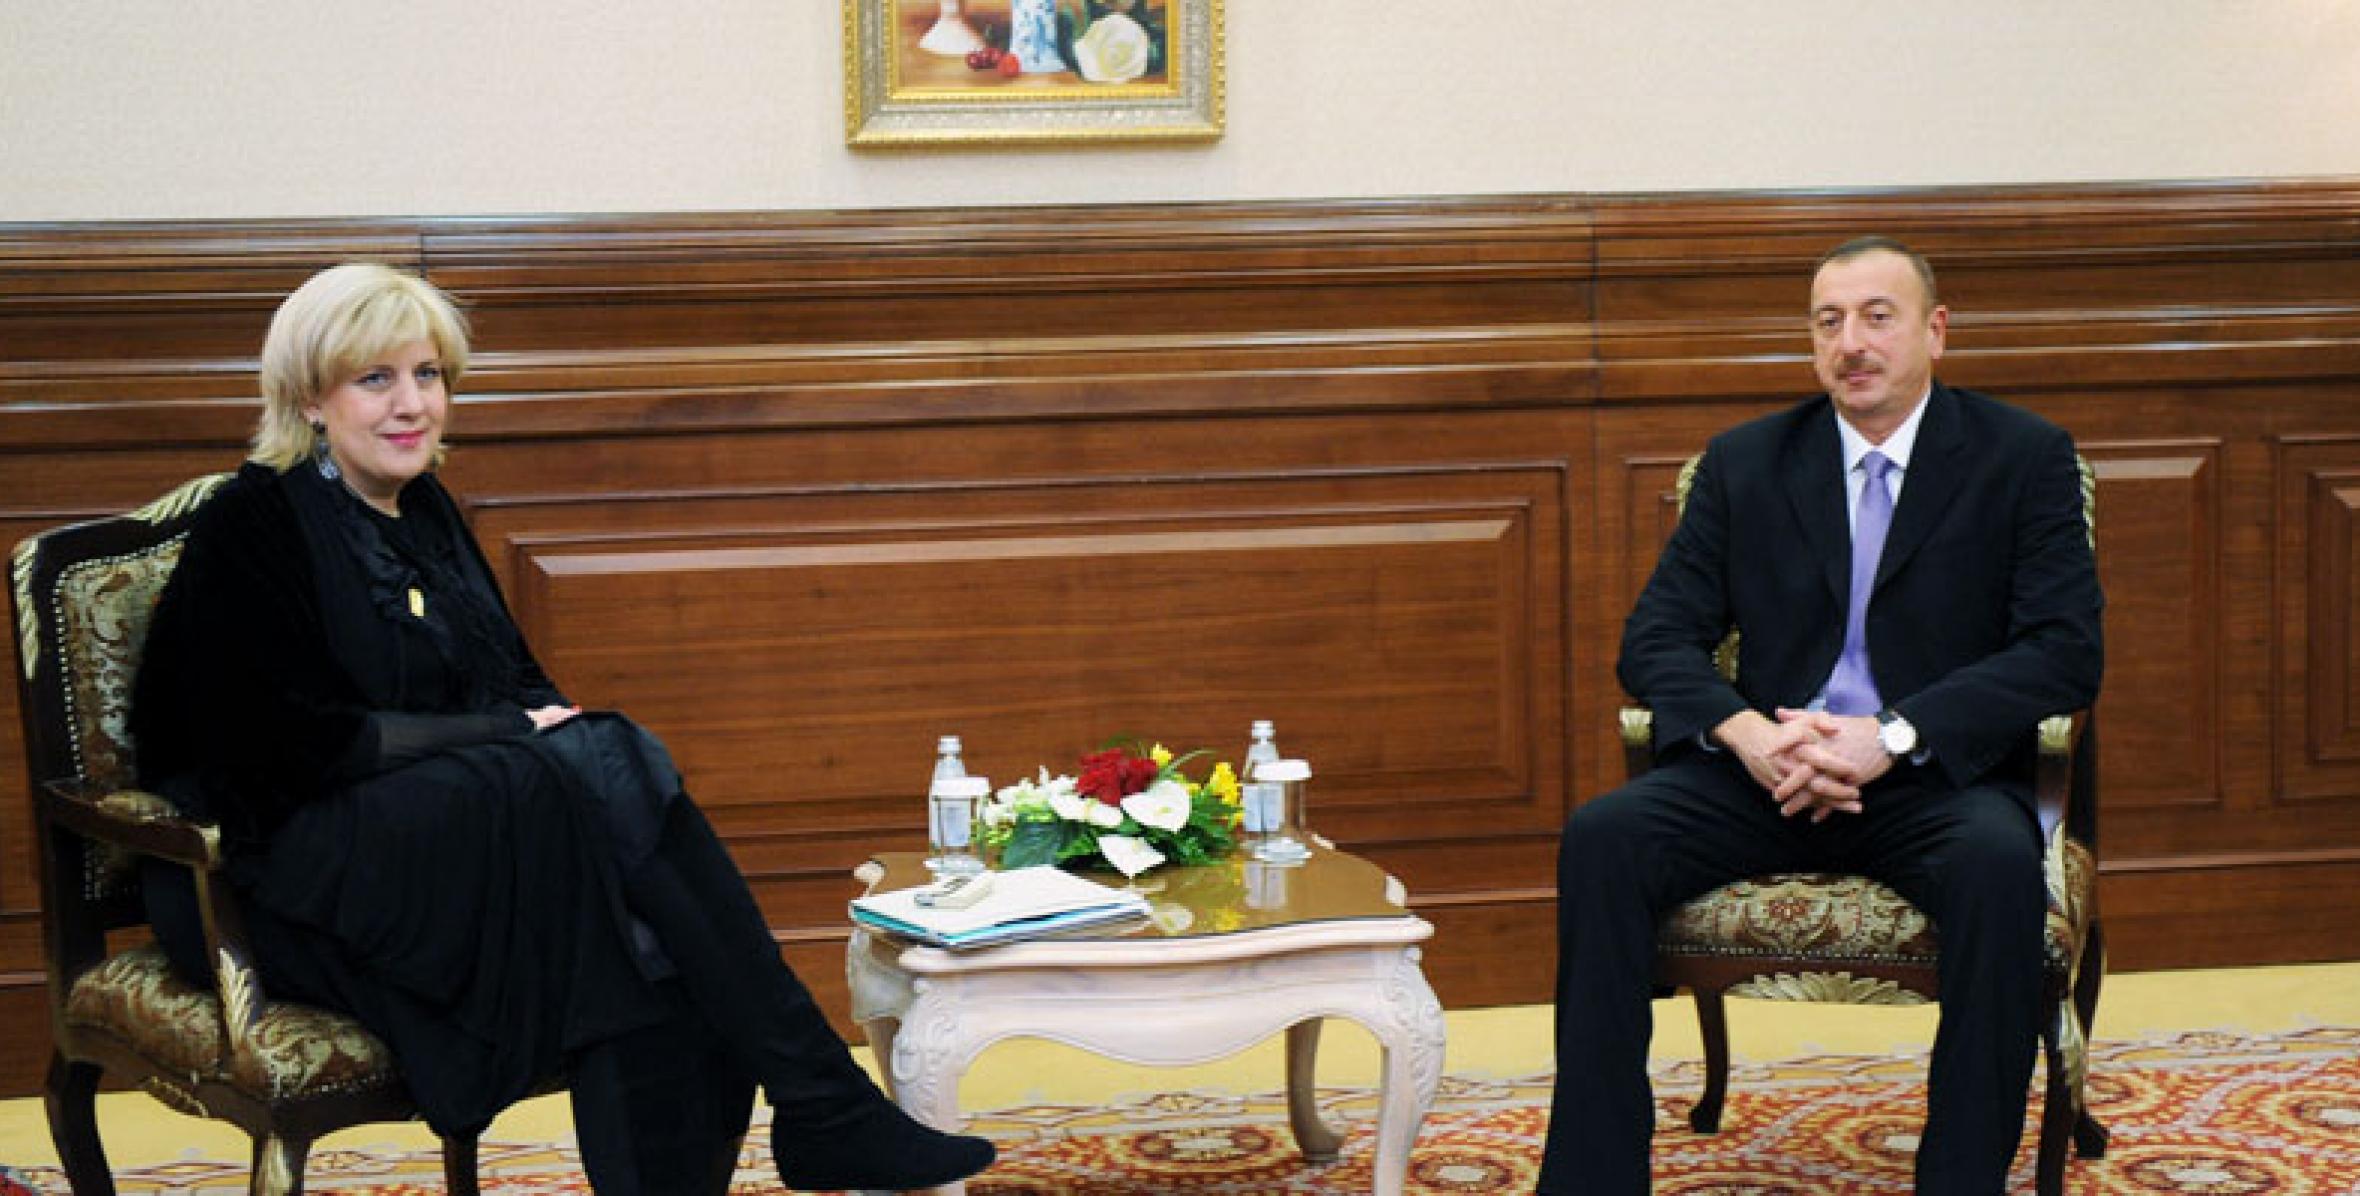 Ilham Aliyev met with the OSCE Representative on Freedom of the Media, Dunja Mijatovic